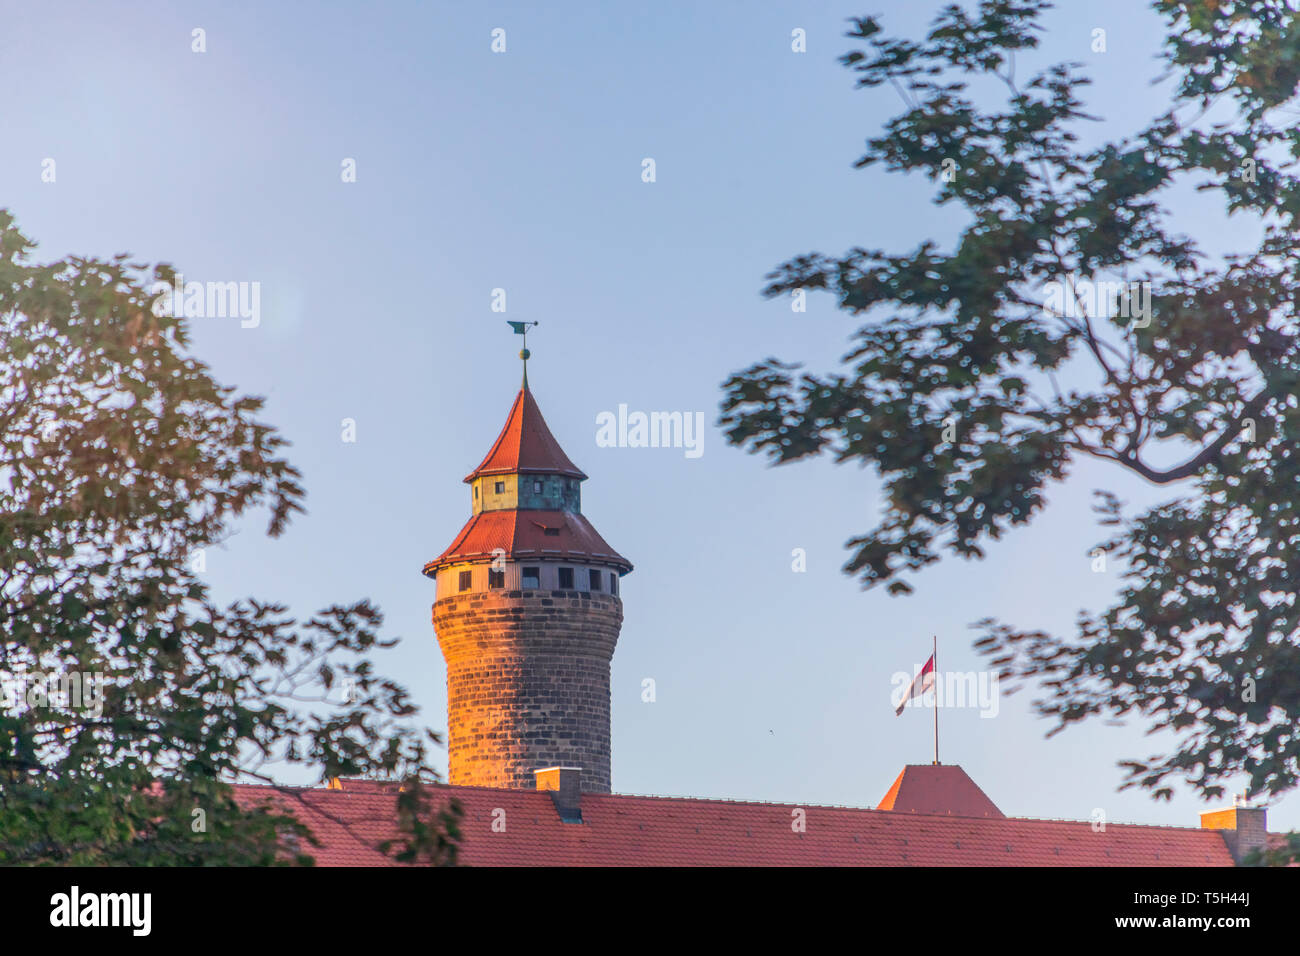 Germany, Nuremberg, Old town, Sinwell Tower Stock Photo